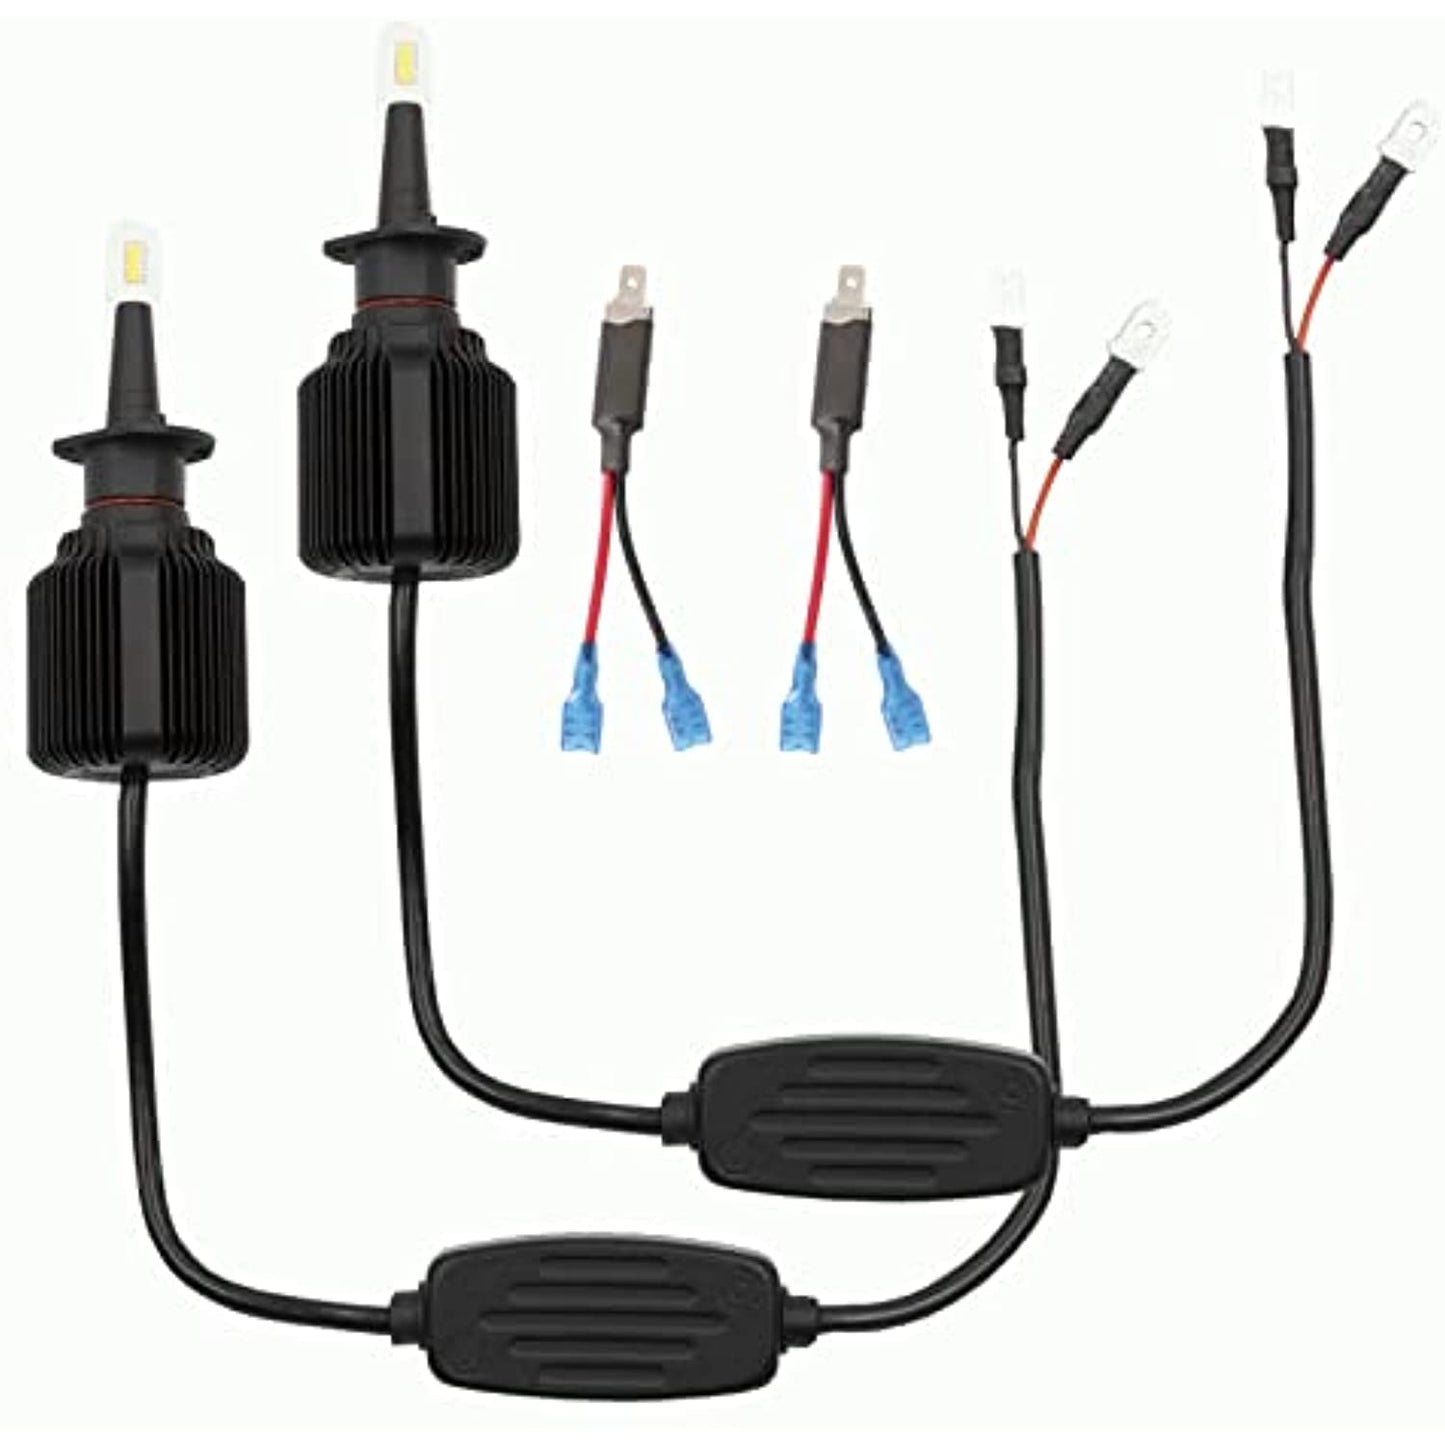 METRA - LED Bulbs H1 Single-Beam - Pair (DL-H1)